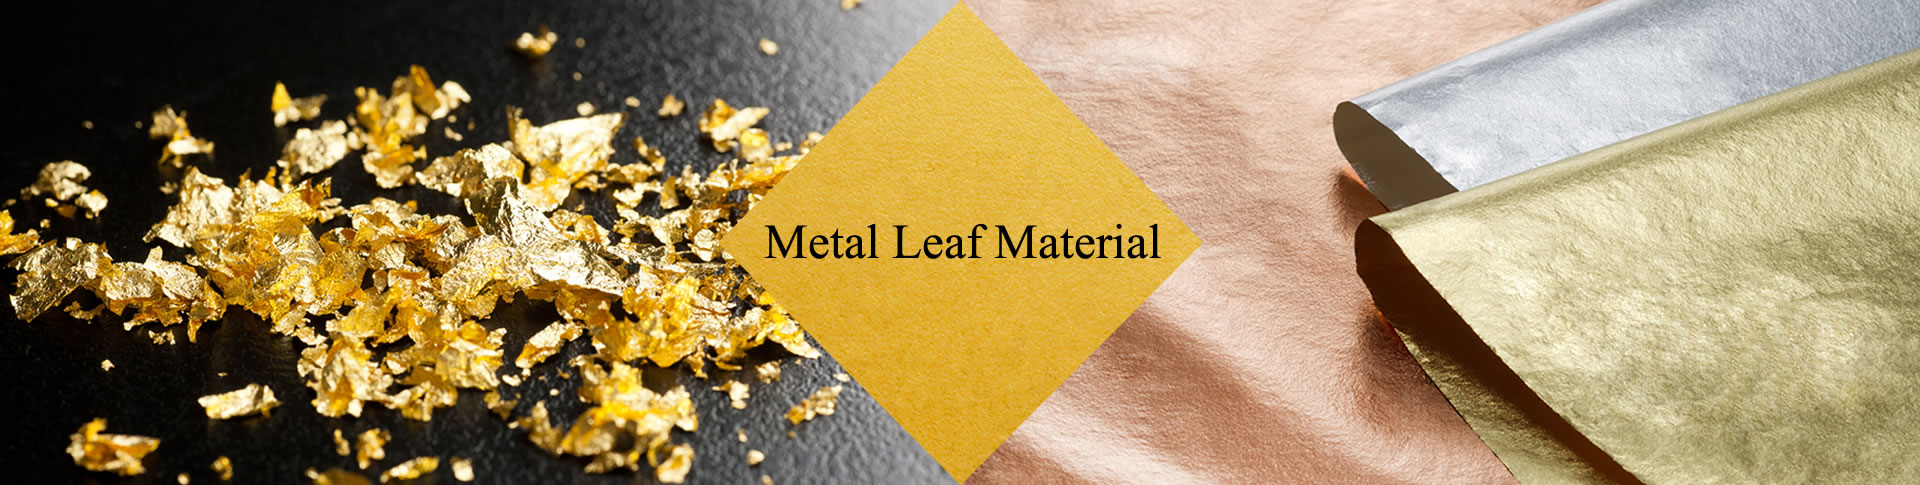 Metal Leaf Material